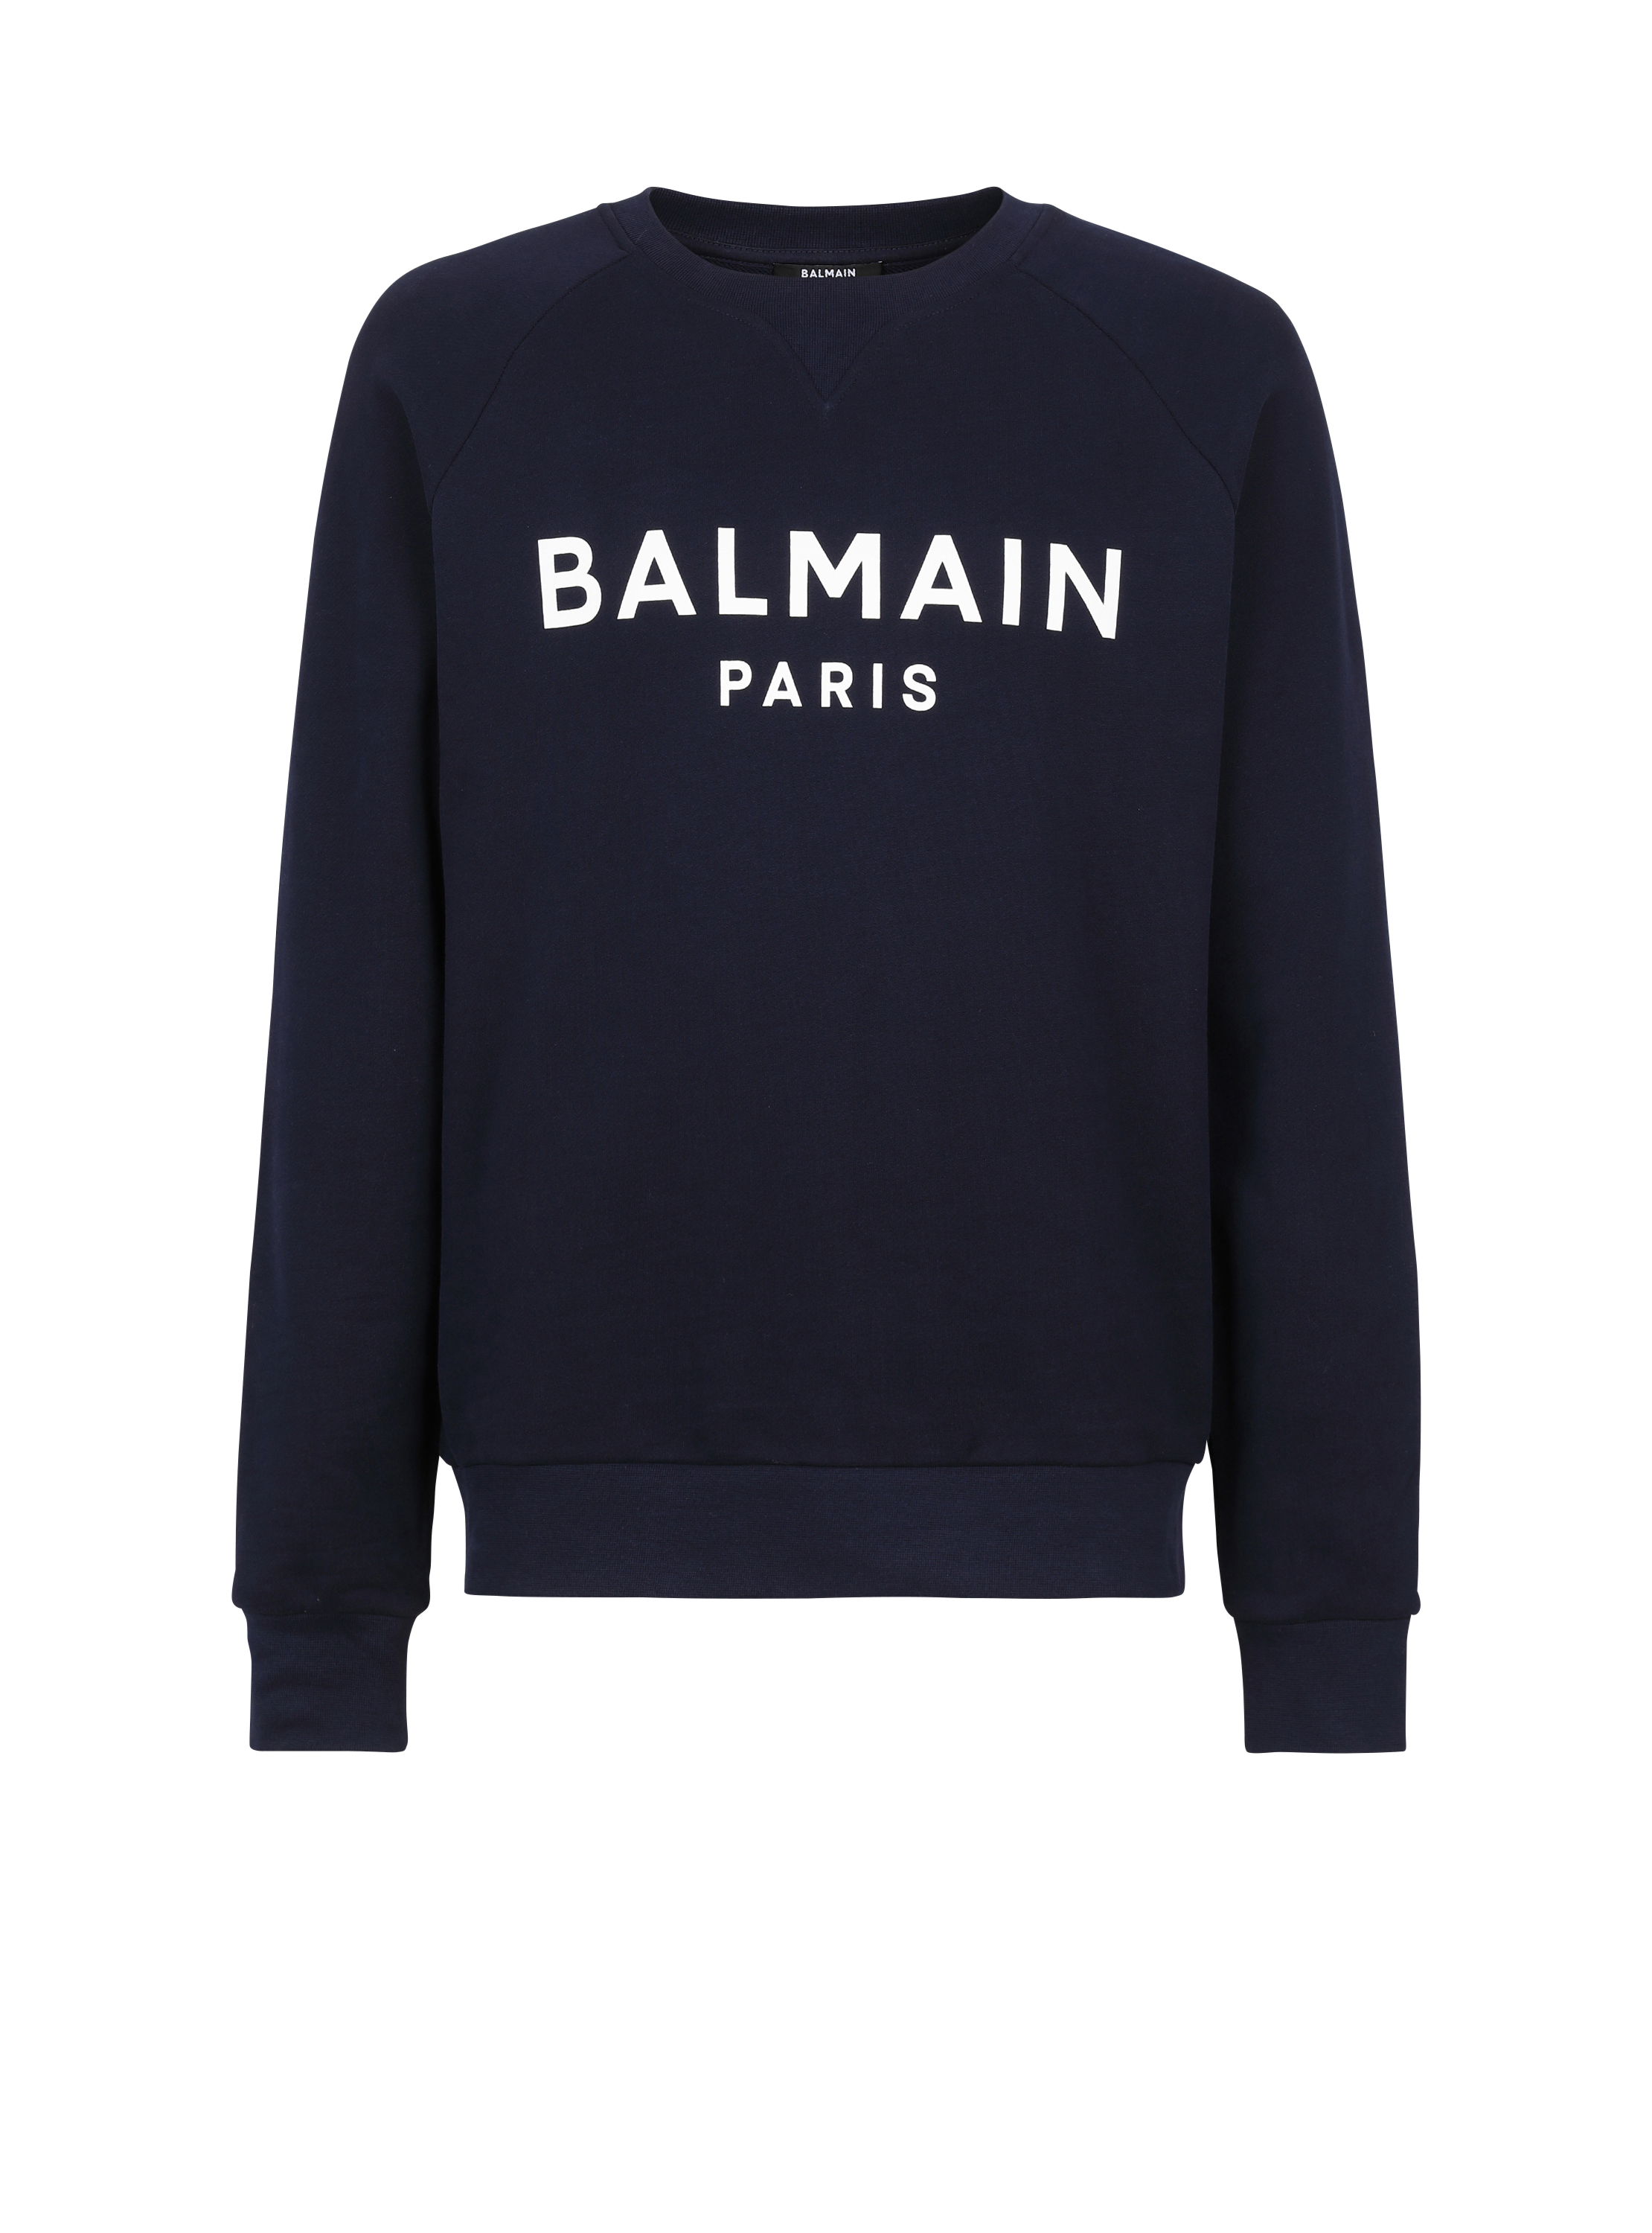 Cotton sweatshirt with flocked Balmain Paris logo